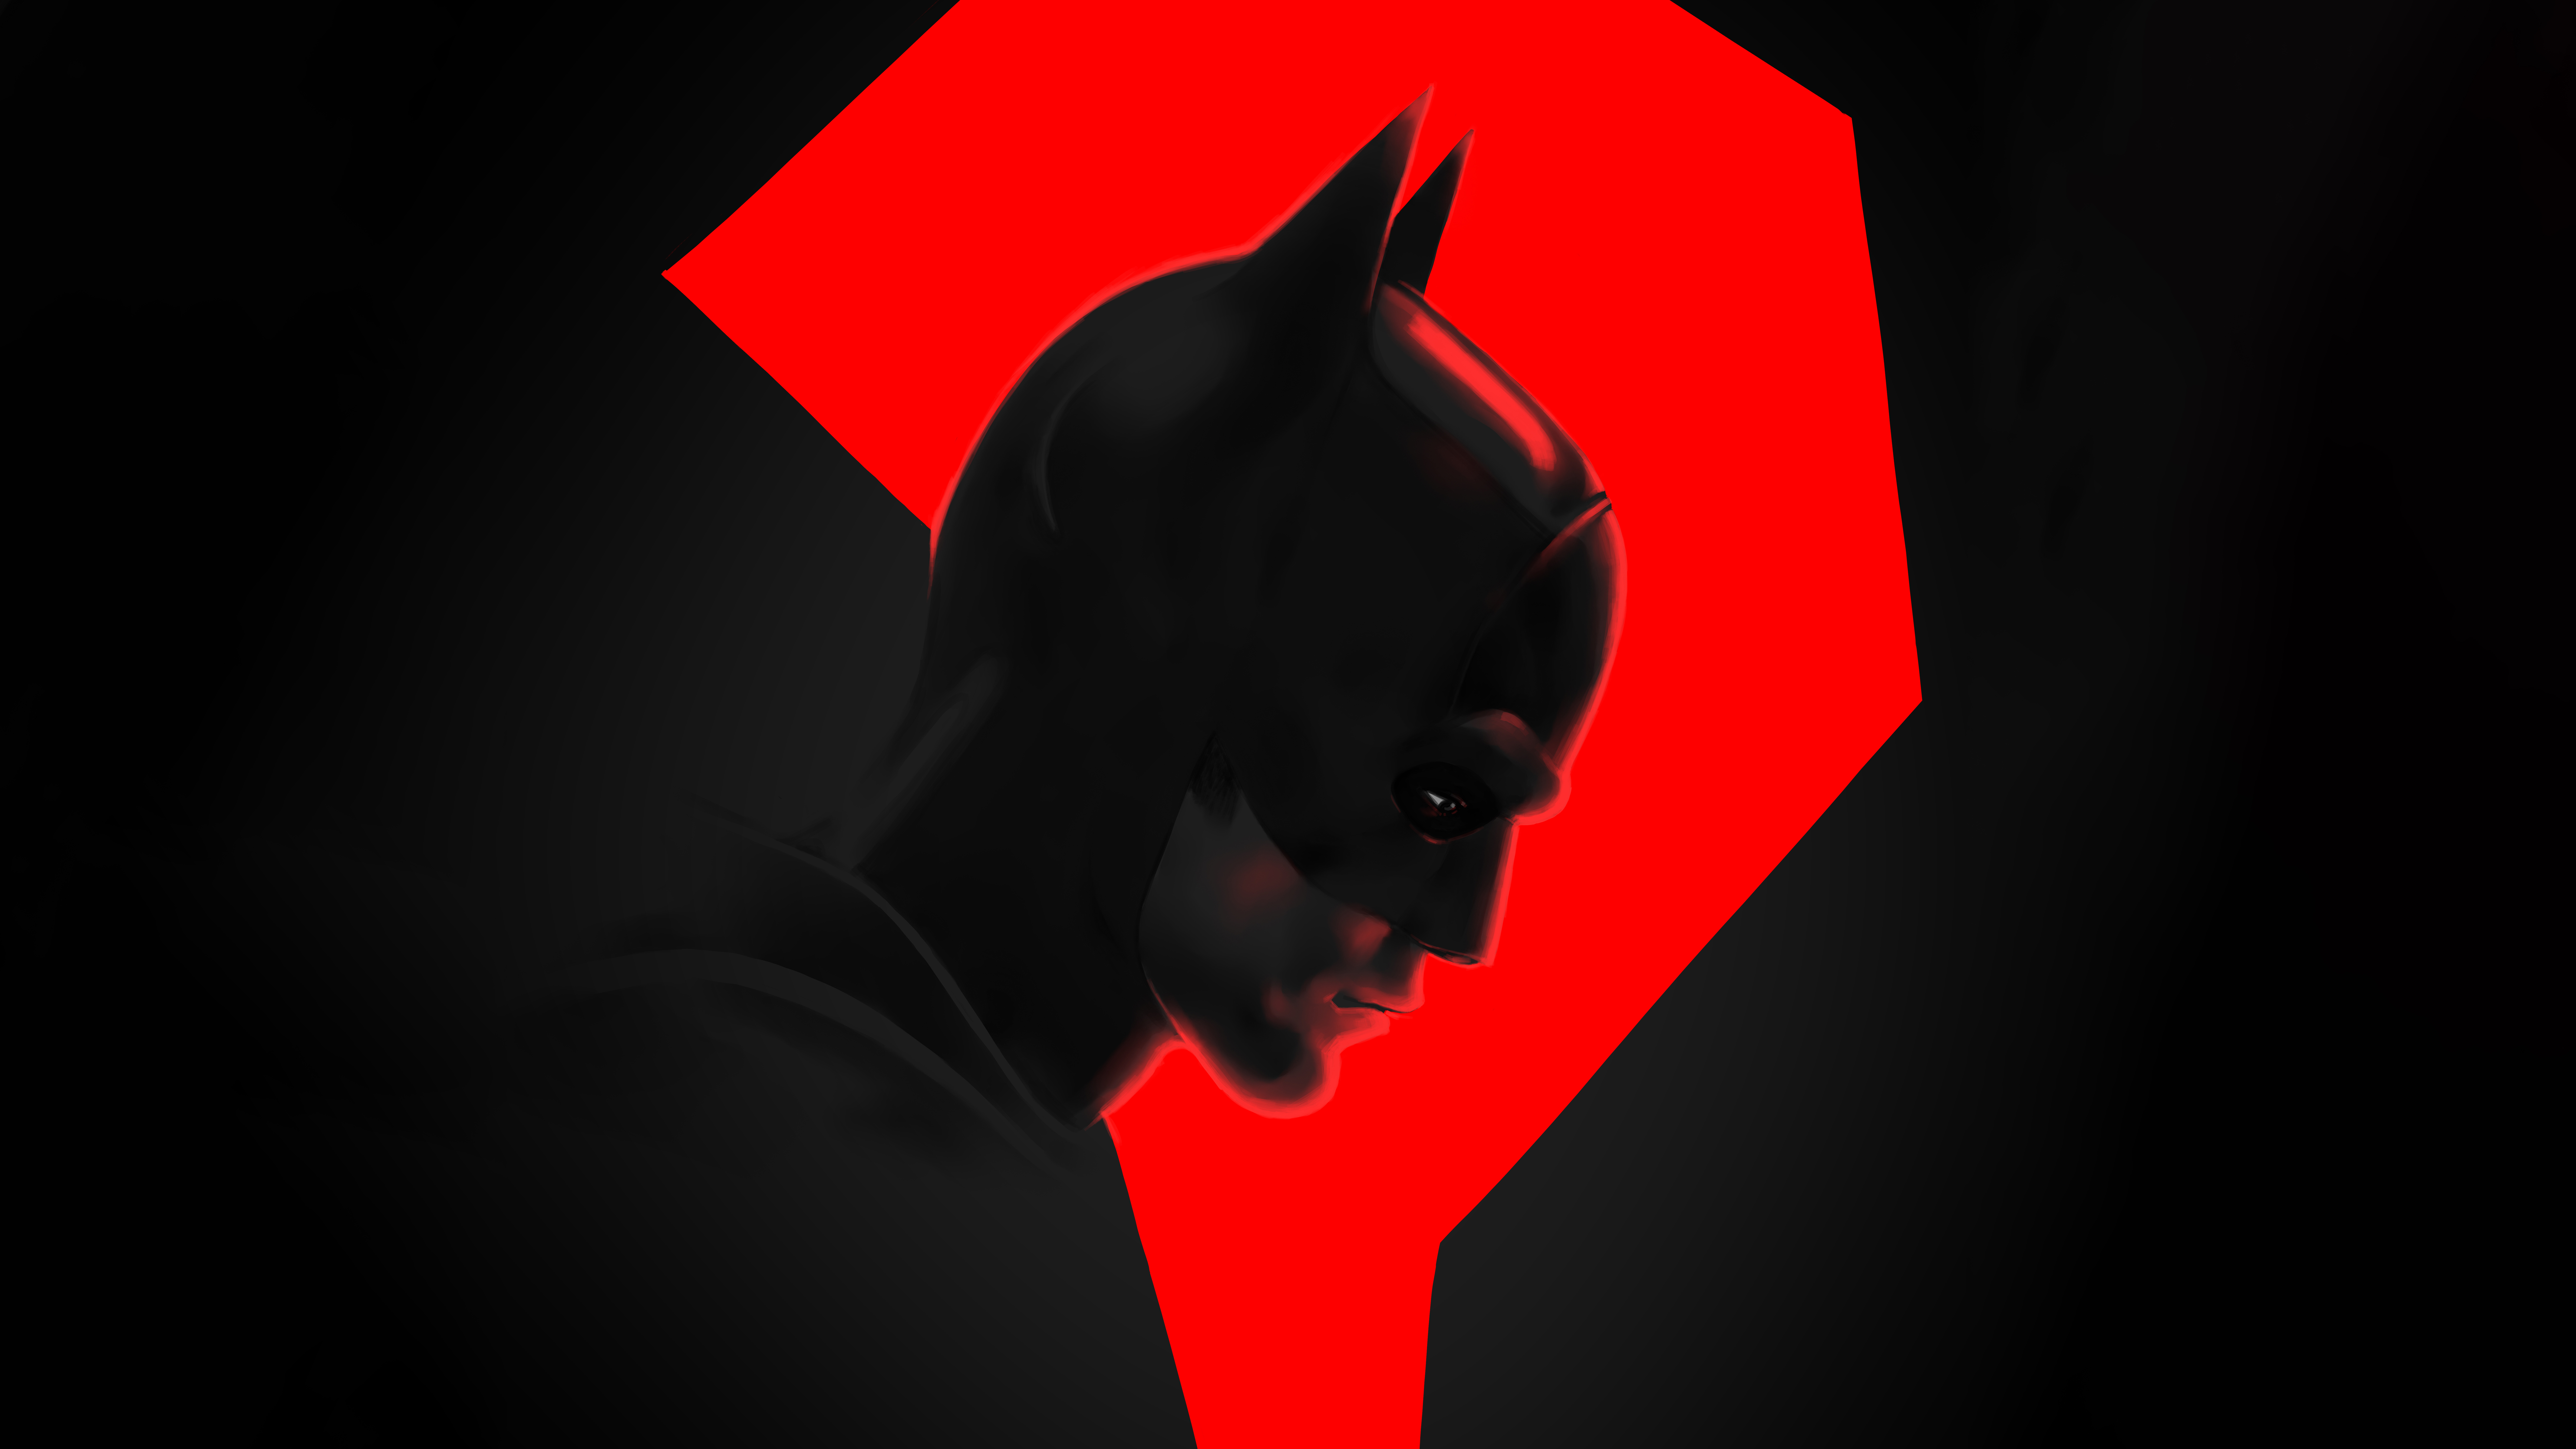 The Batman 8k Ultra HD Wallpaper